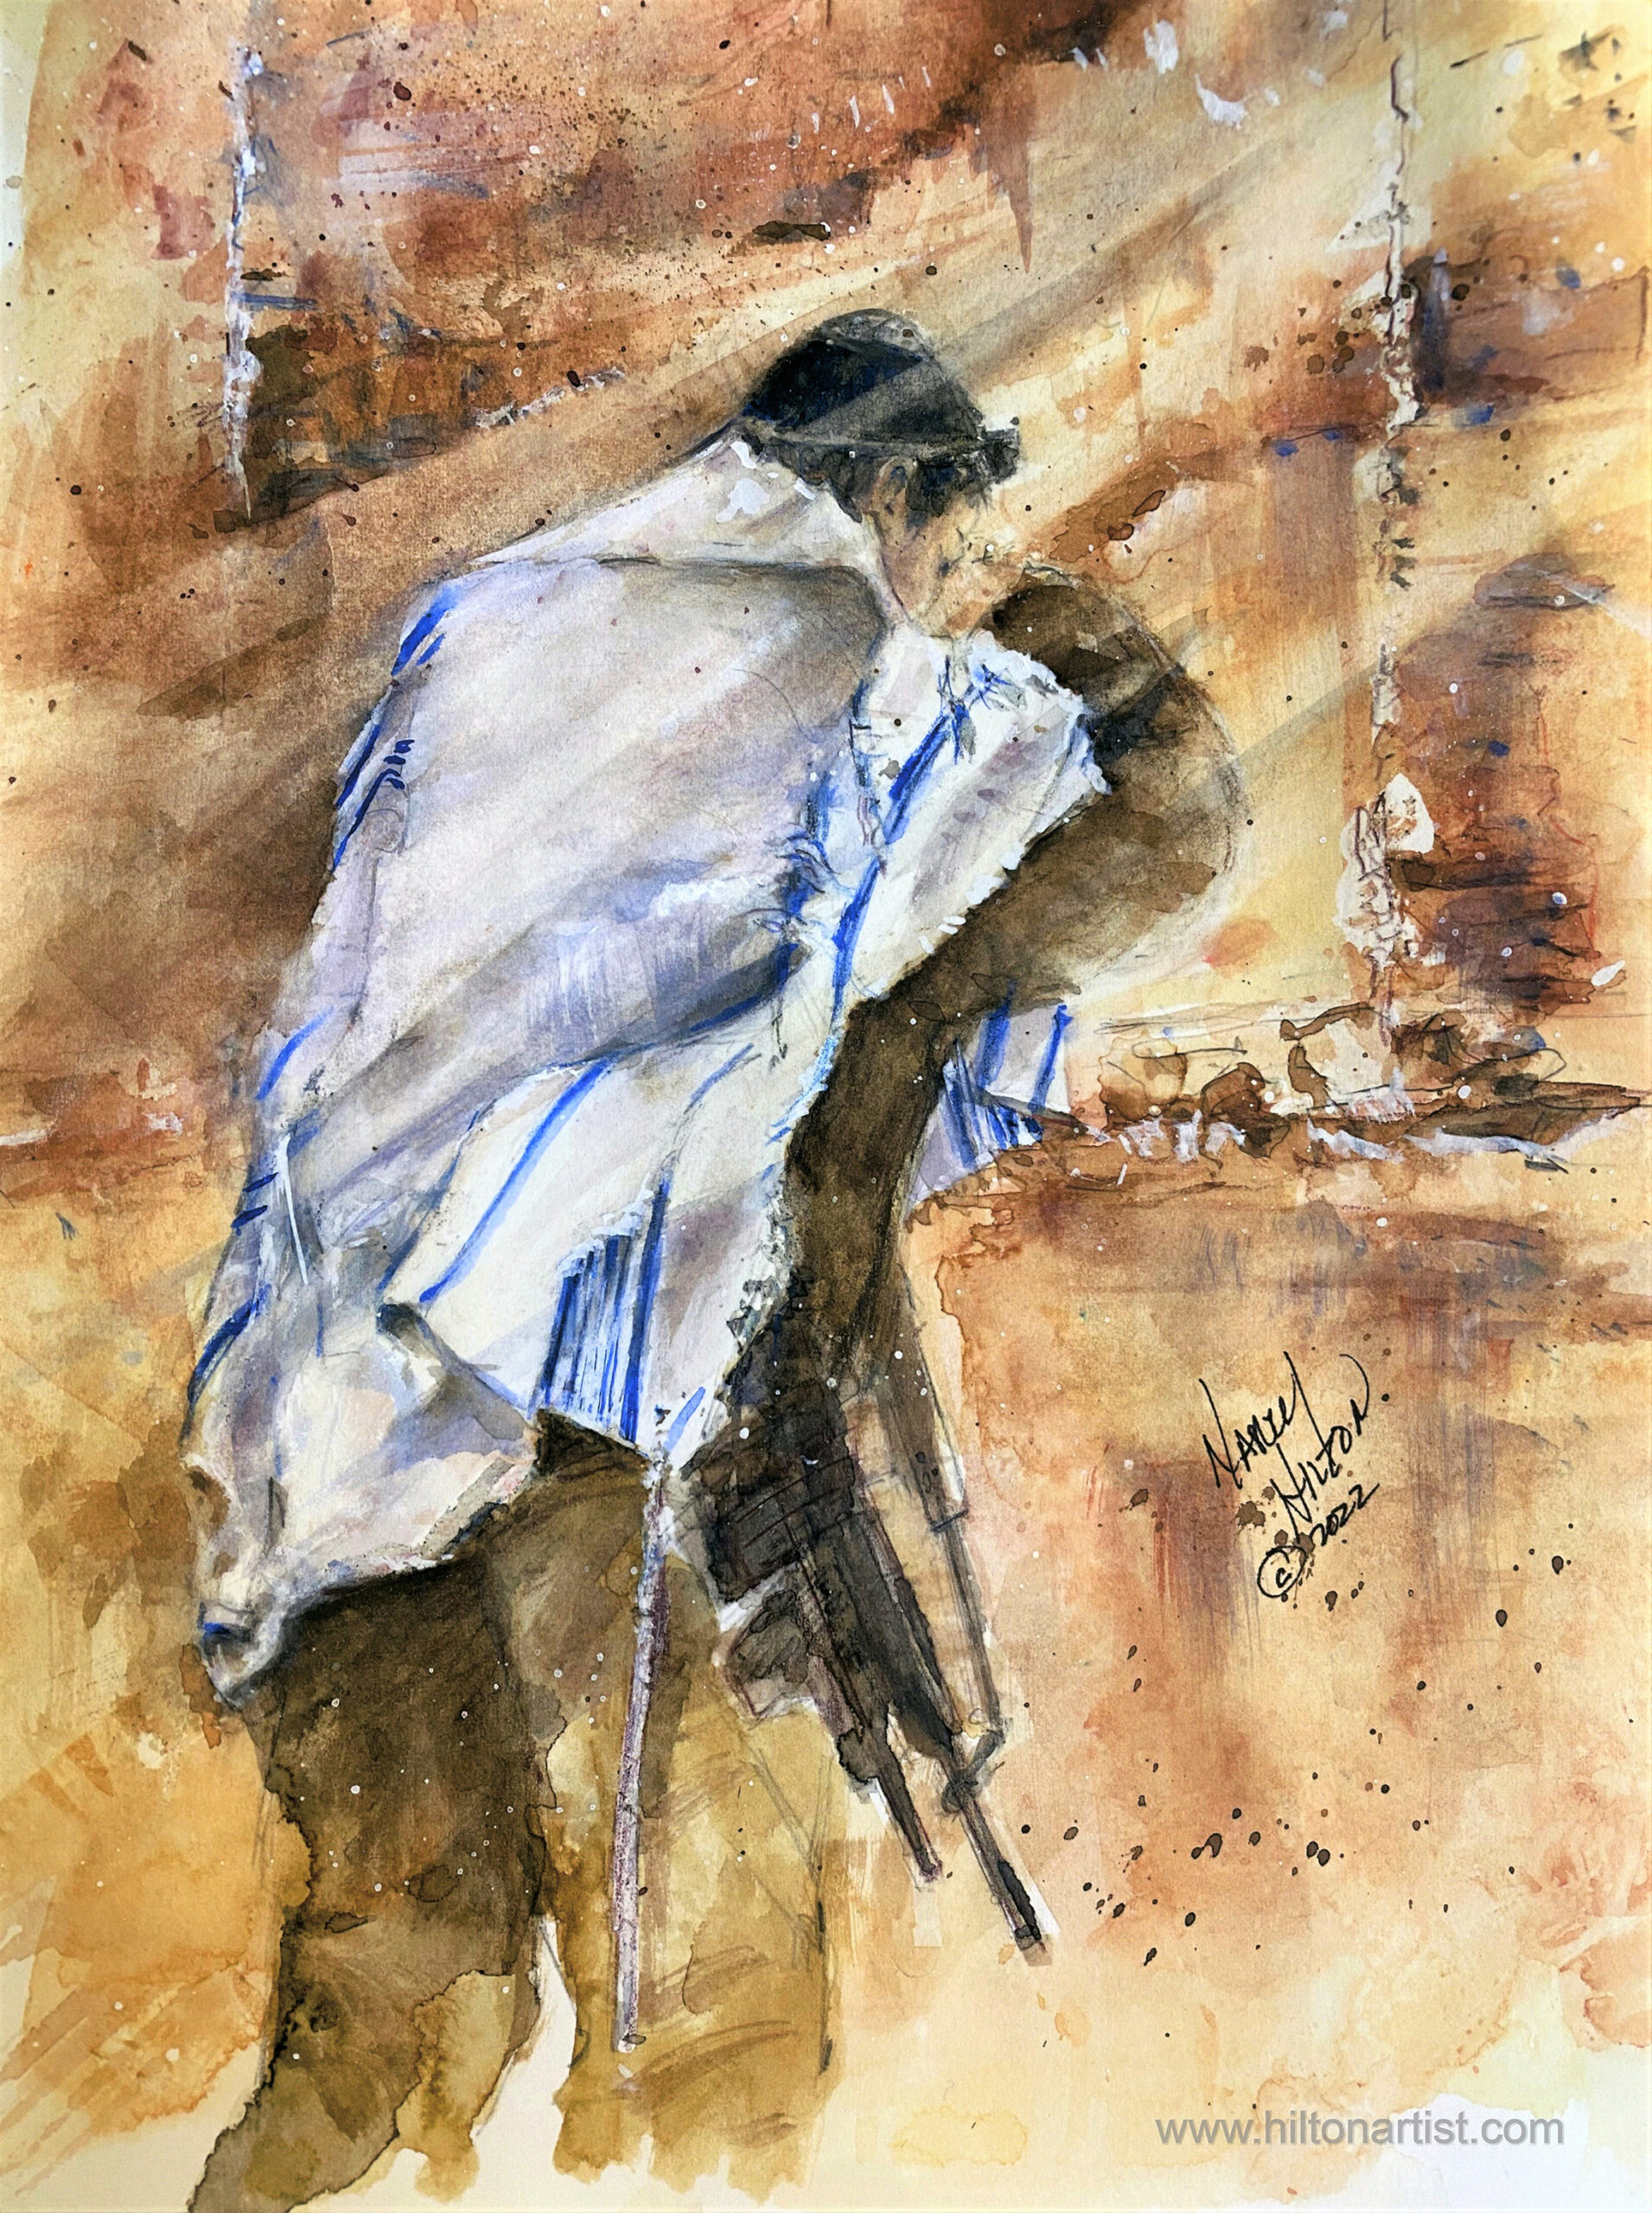 Soldier praying at the Western Wall, Jerusalem